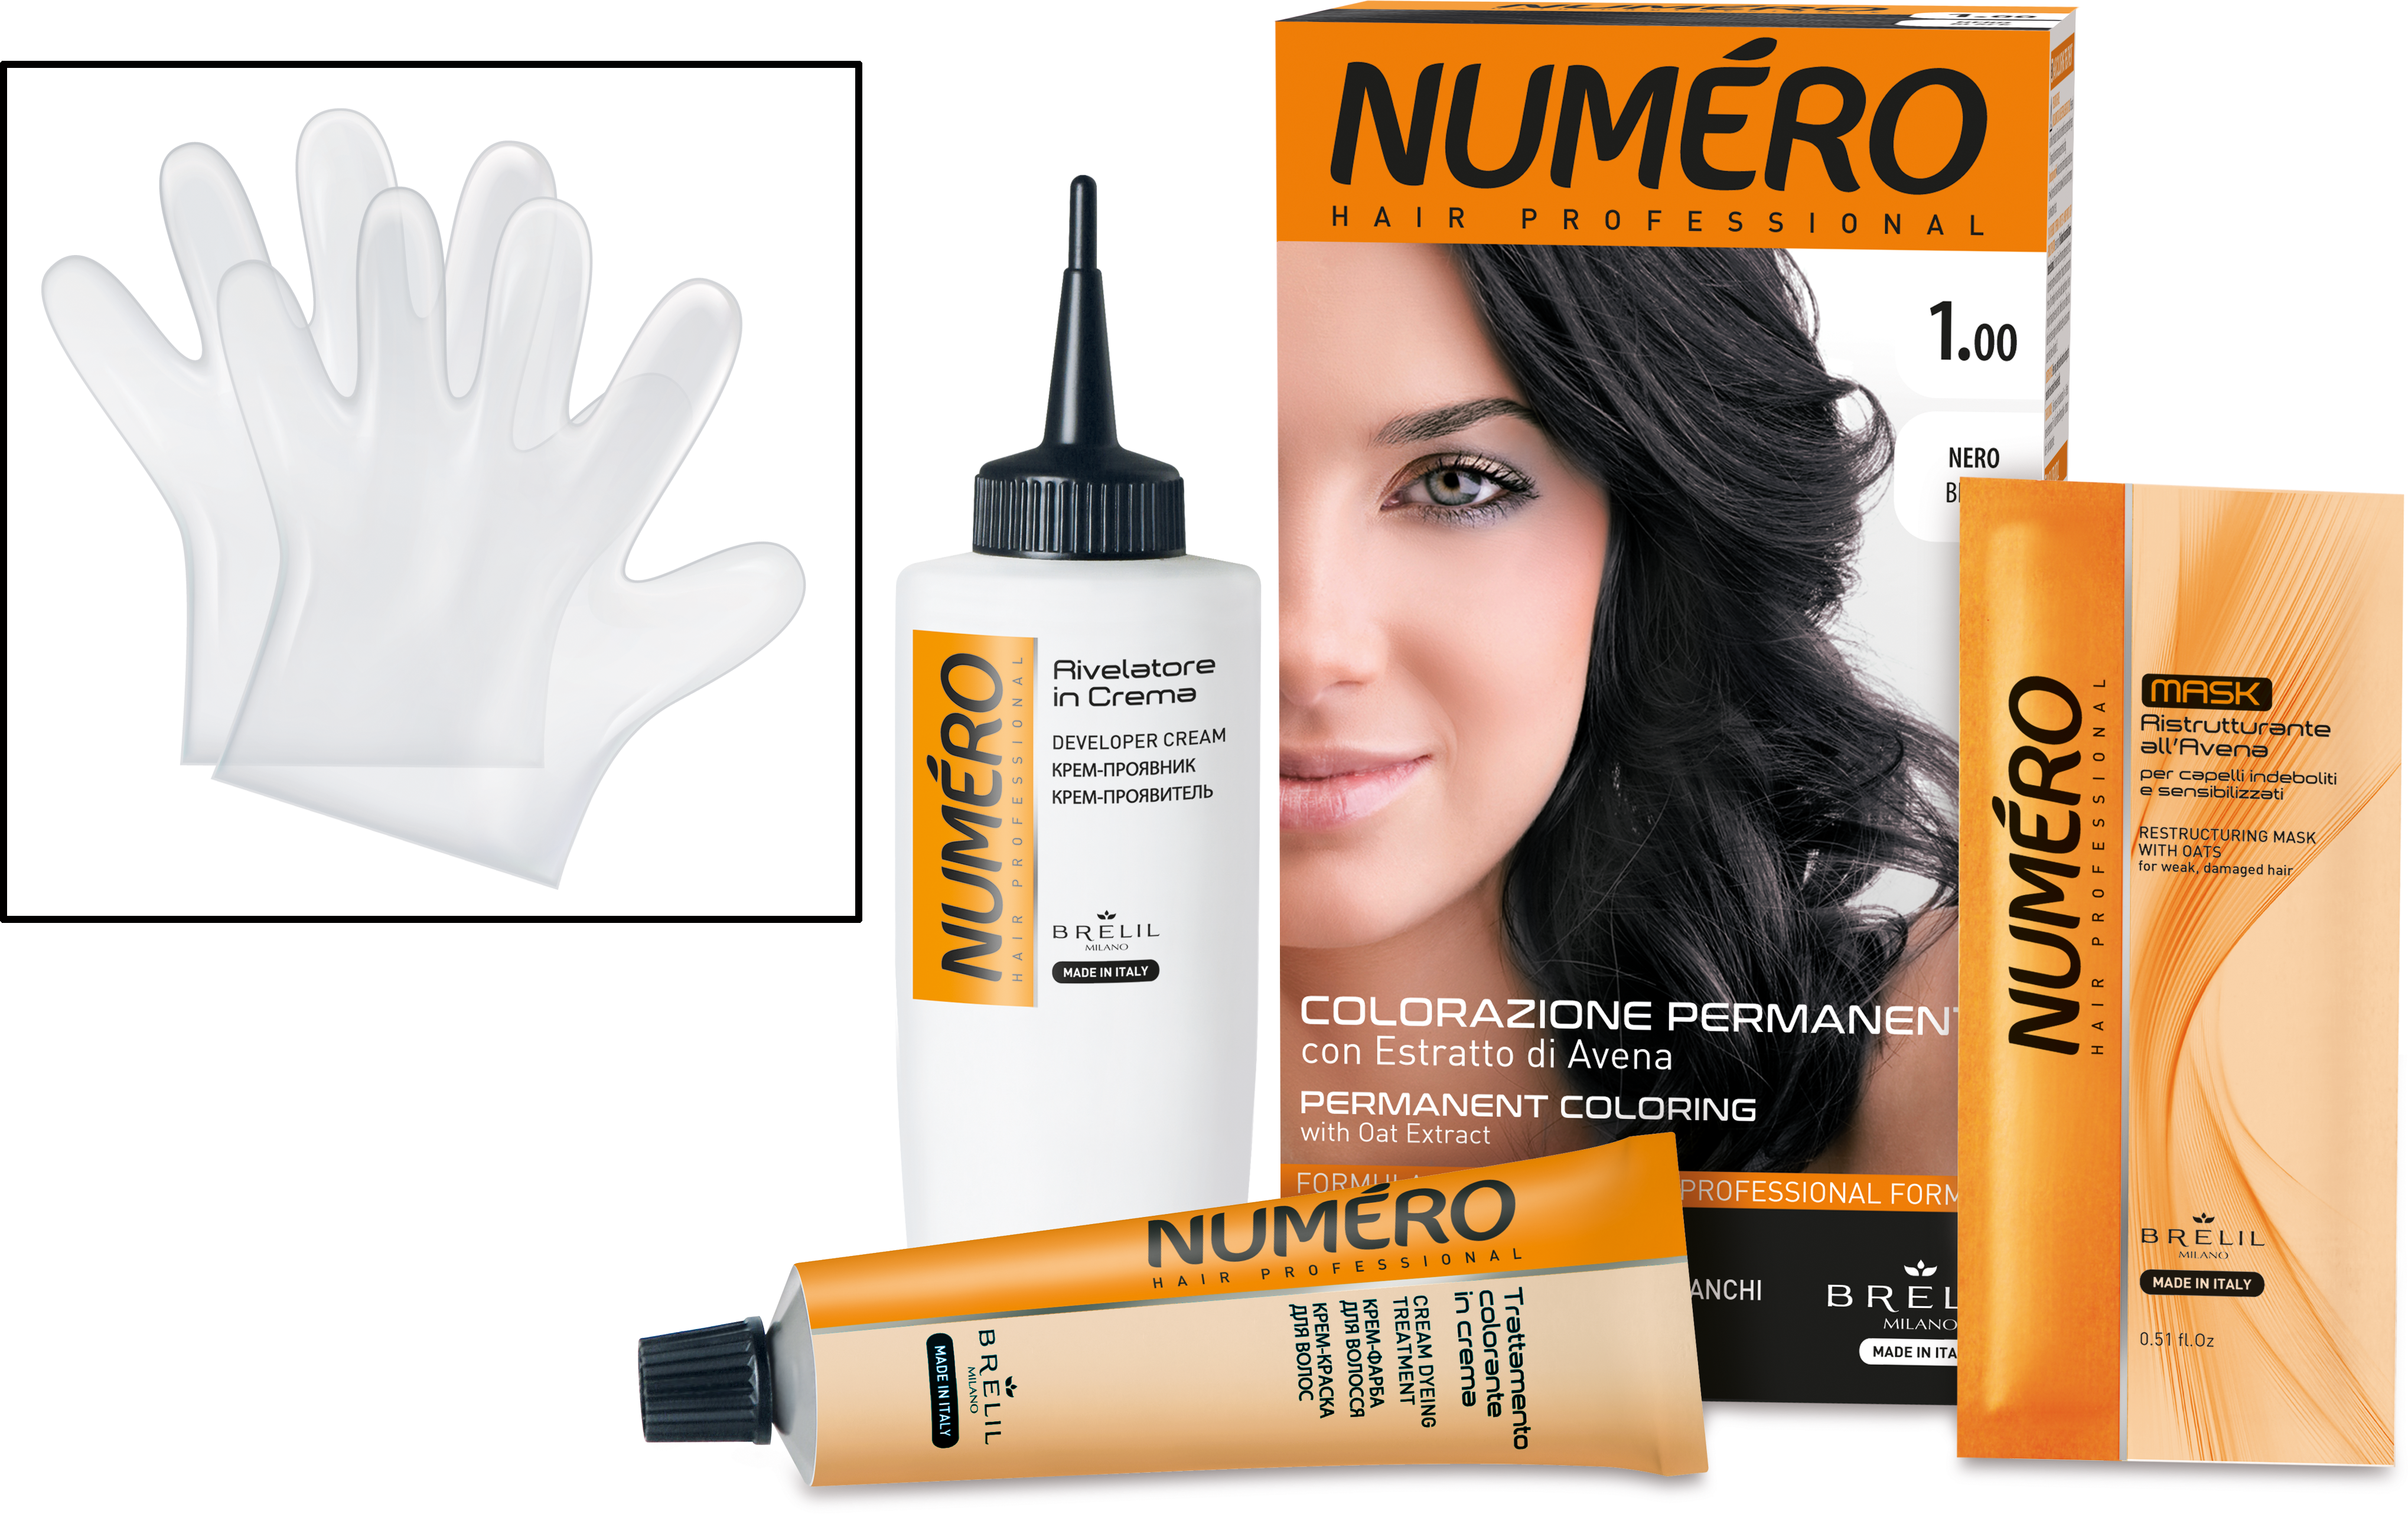 Краска для волос Numero Hair Professional Black, тон 1.00 (Черный), 140 мл - фото 2